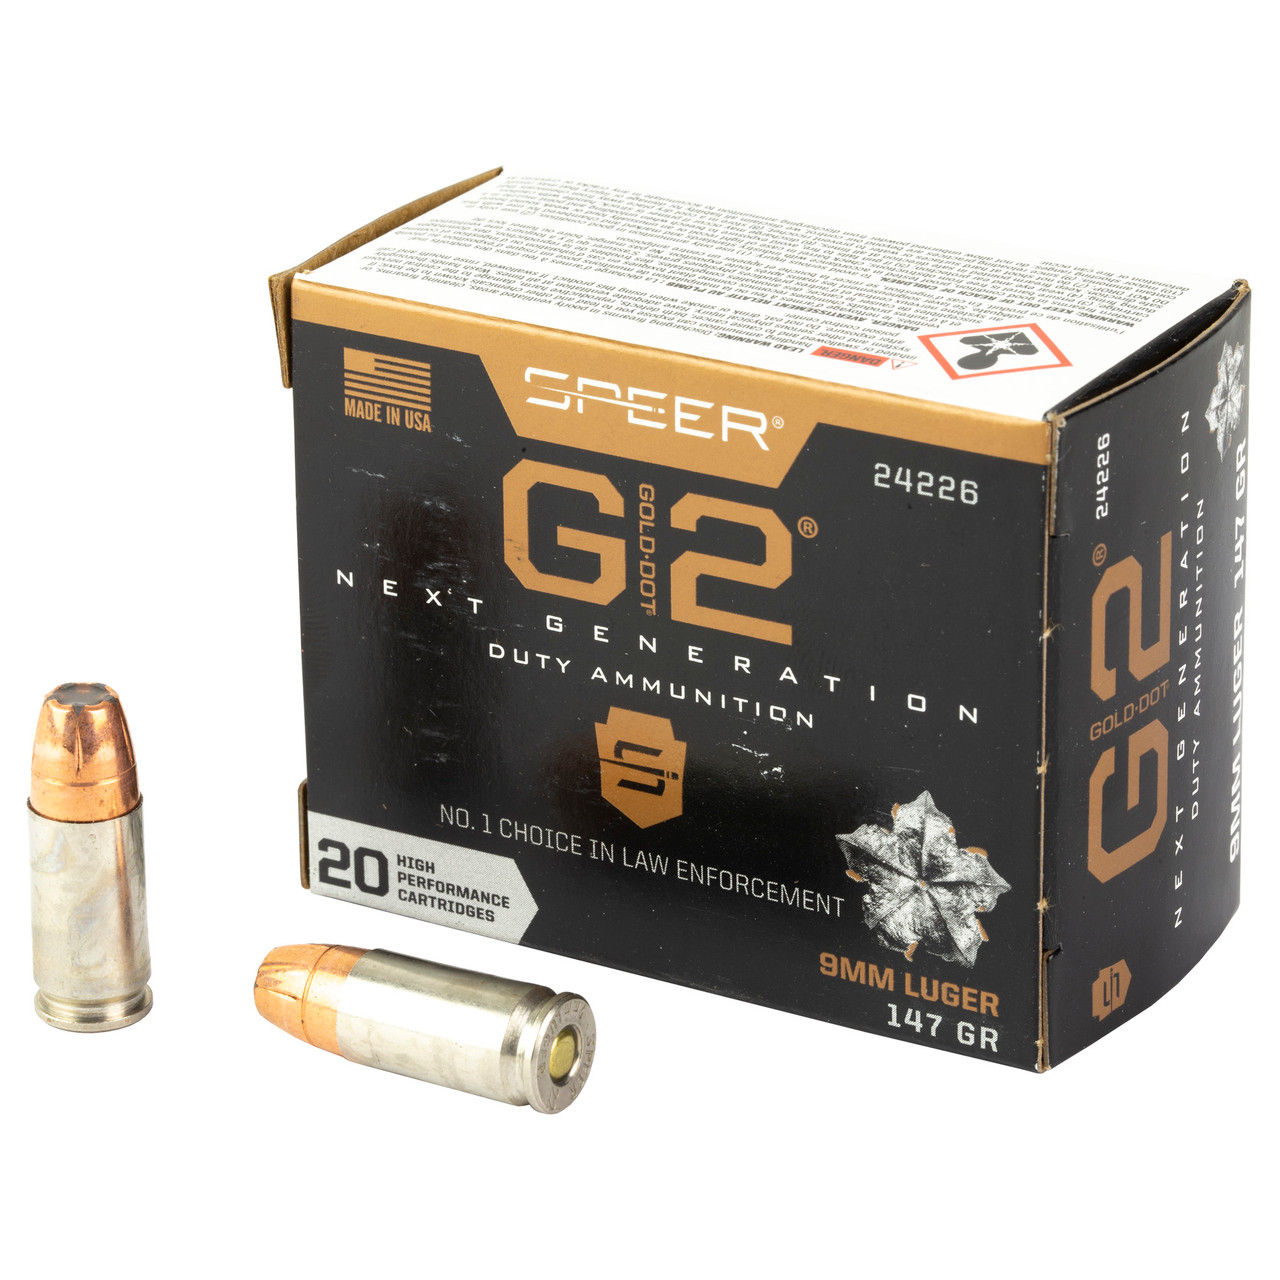 Speer Ammunition 24226 Gold Dot G2 9mm 147gr 20/200